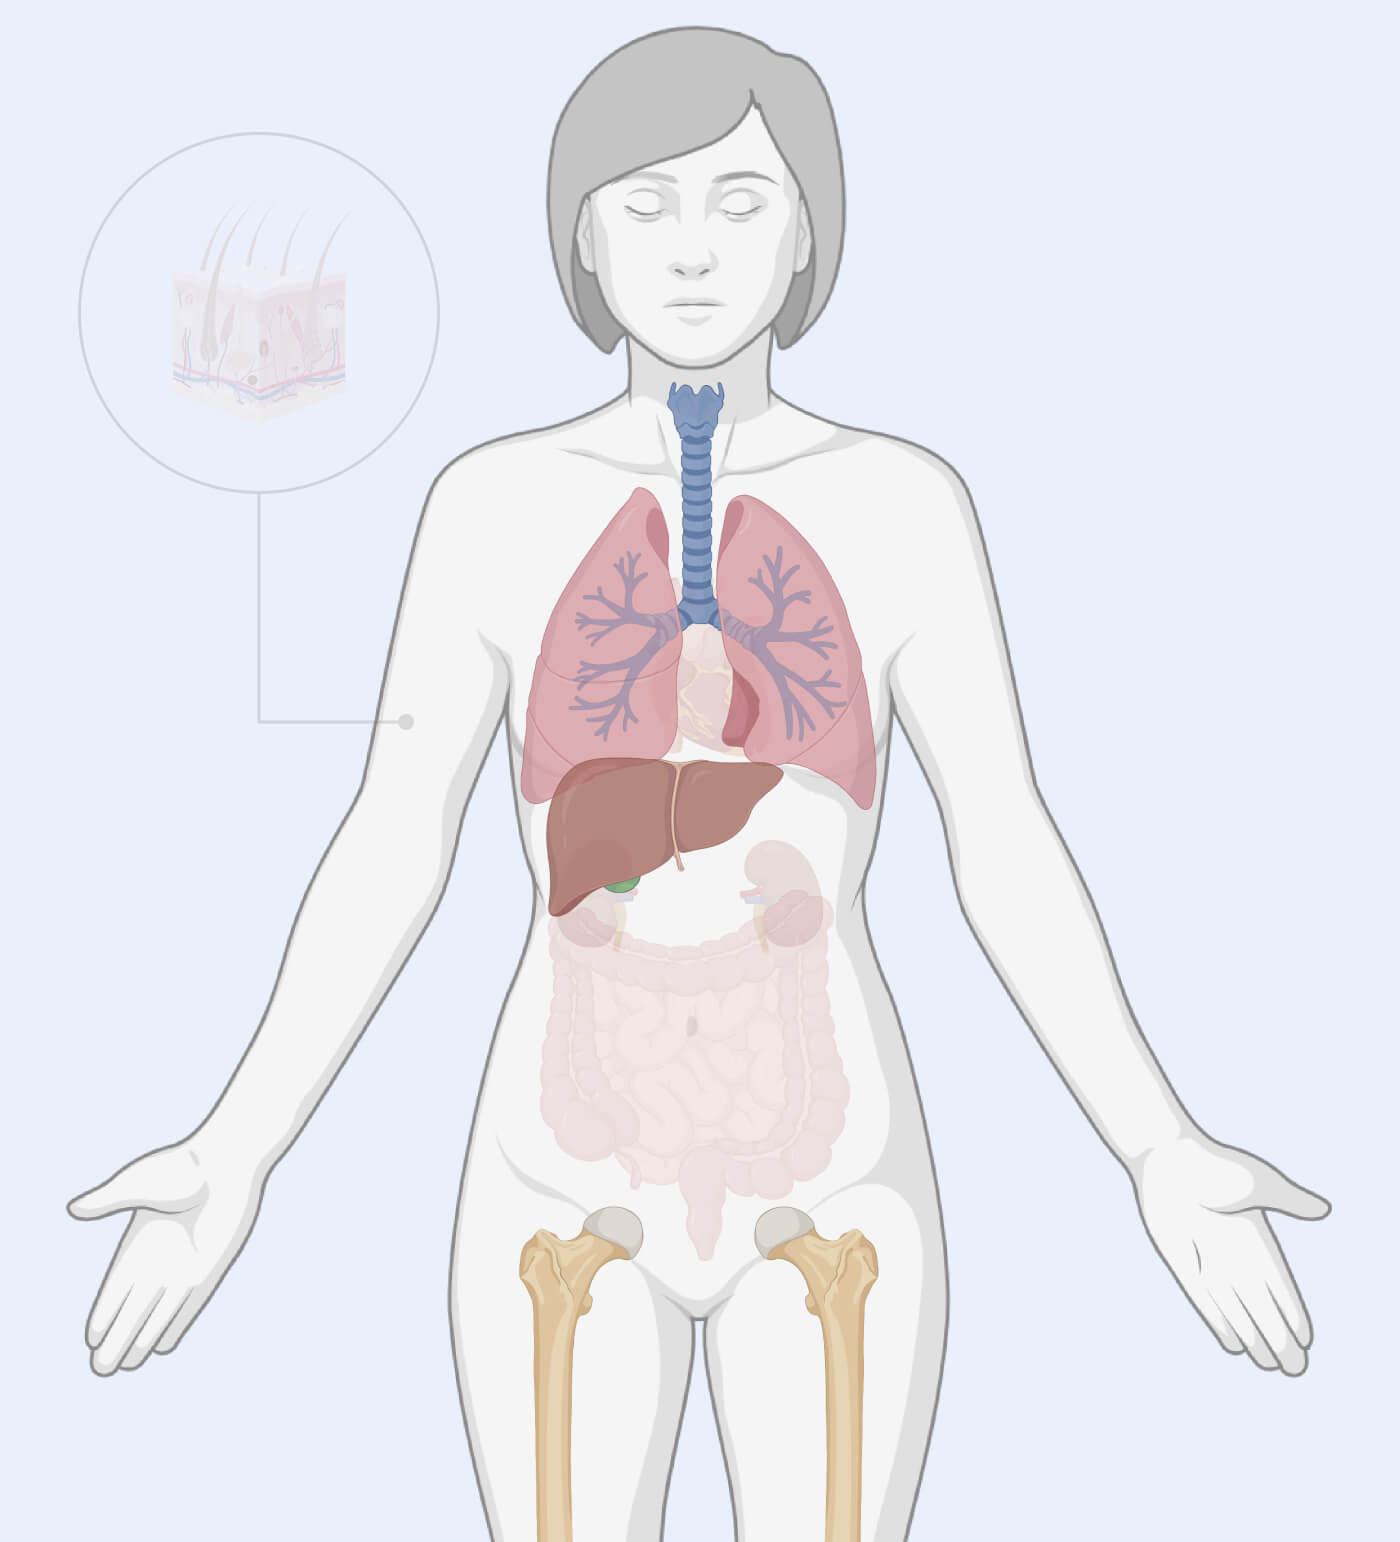 HUMAN – Multi-organ Metastatic Cancer (1) (1)